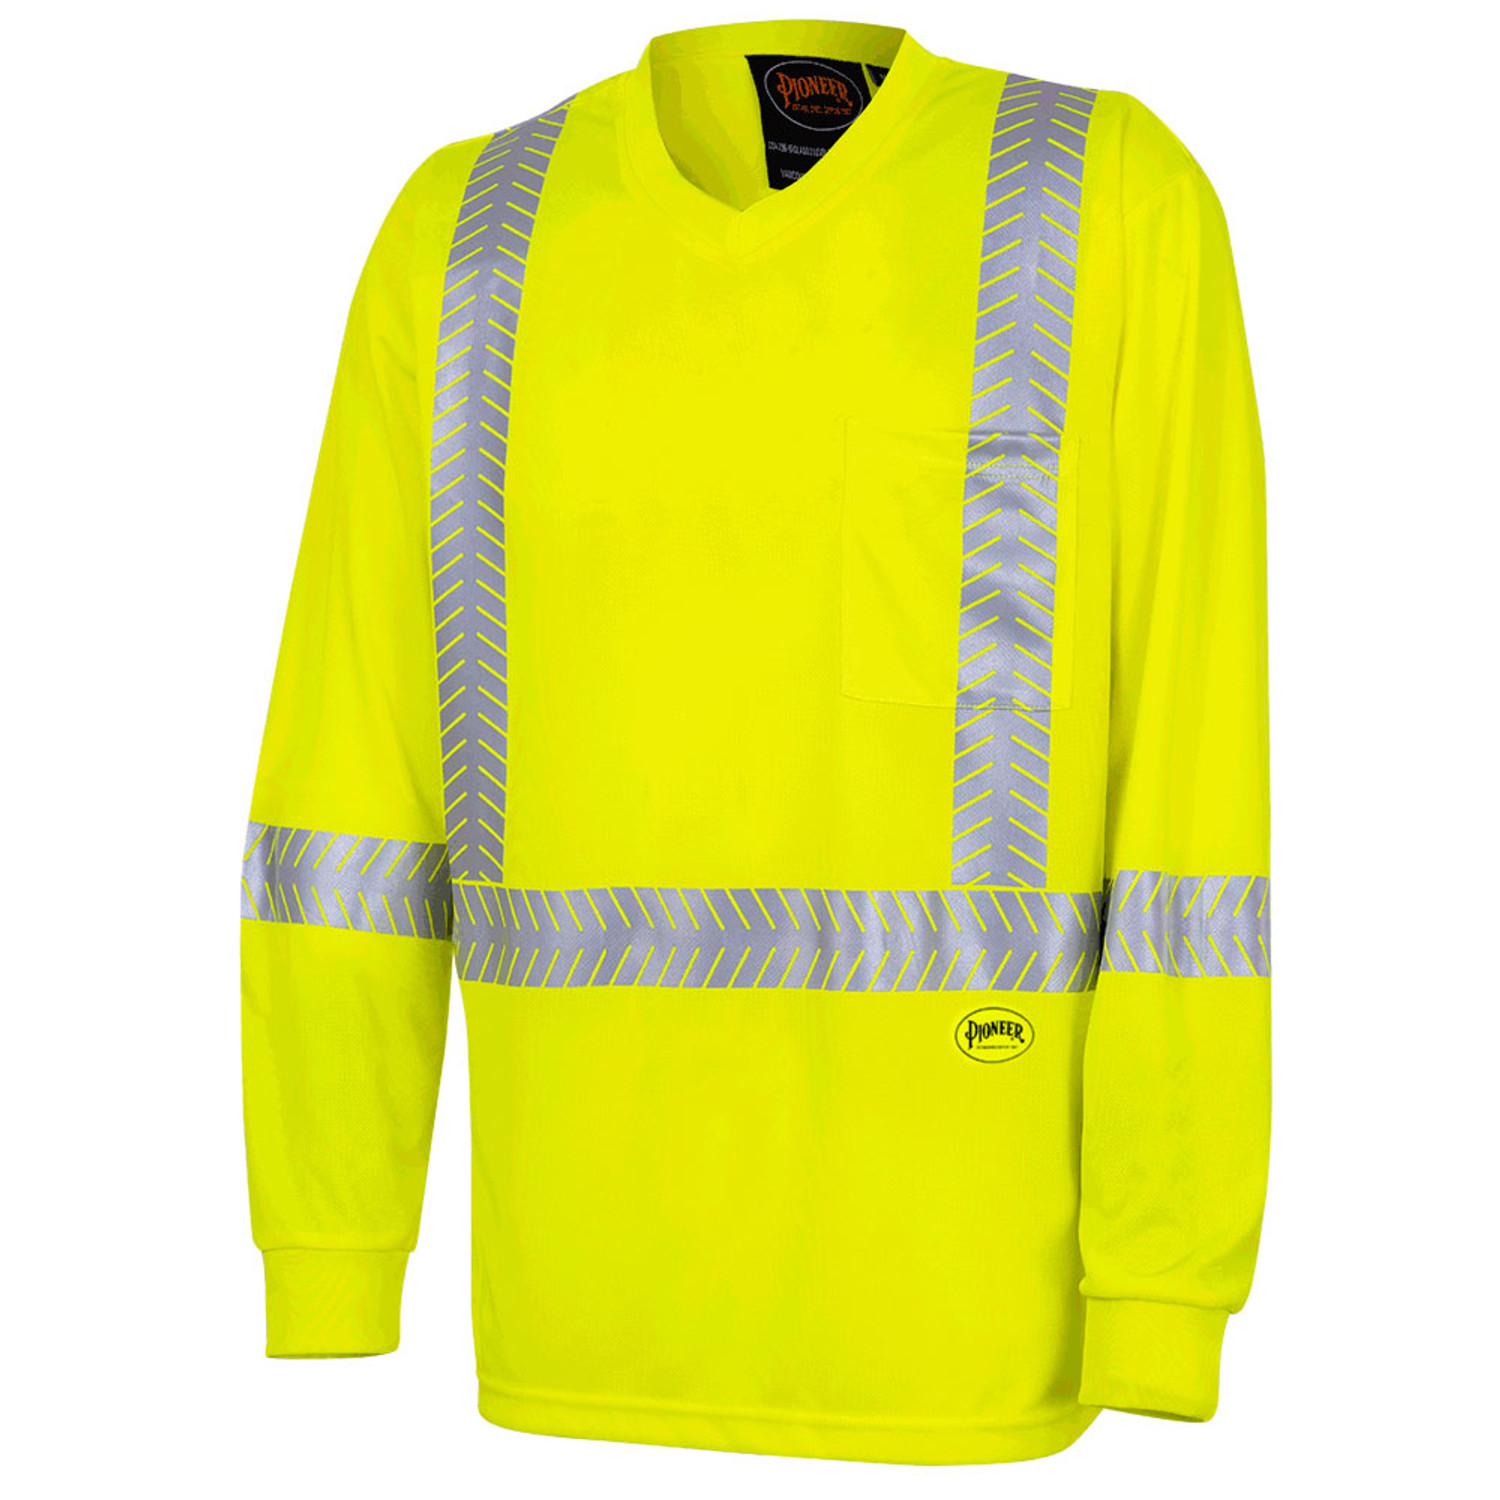 Pioneer 6009 Breathable Traffic Safety Pant - Hi-Viz Yellow/Green